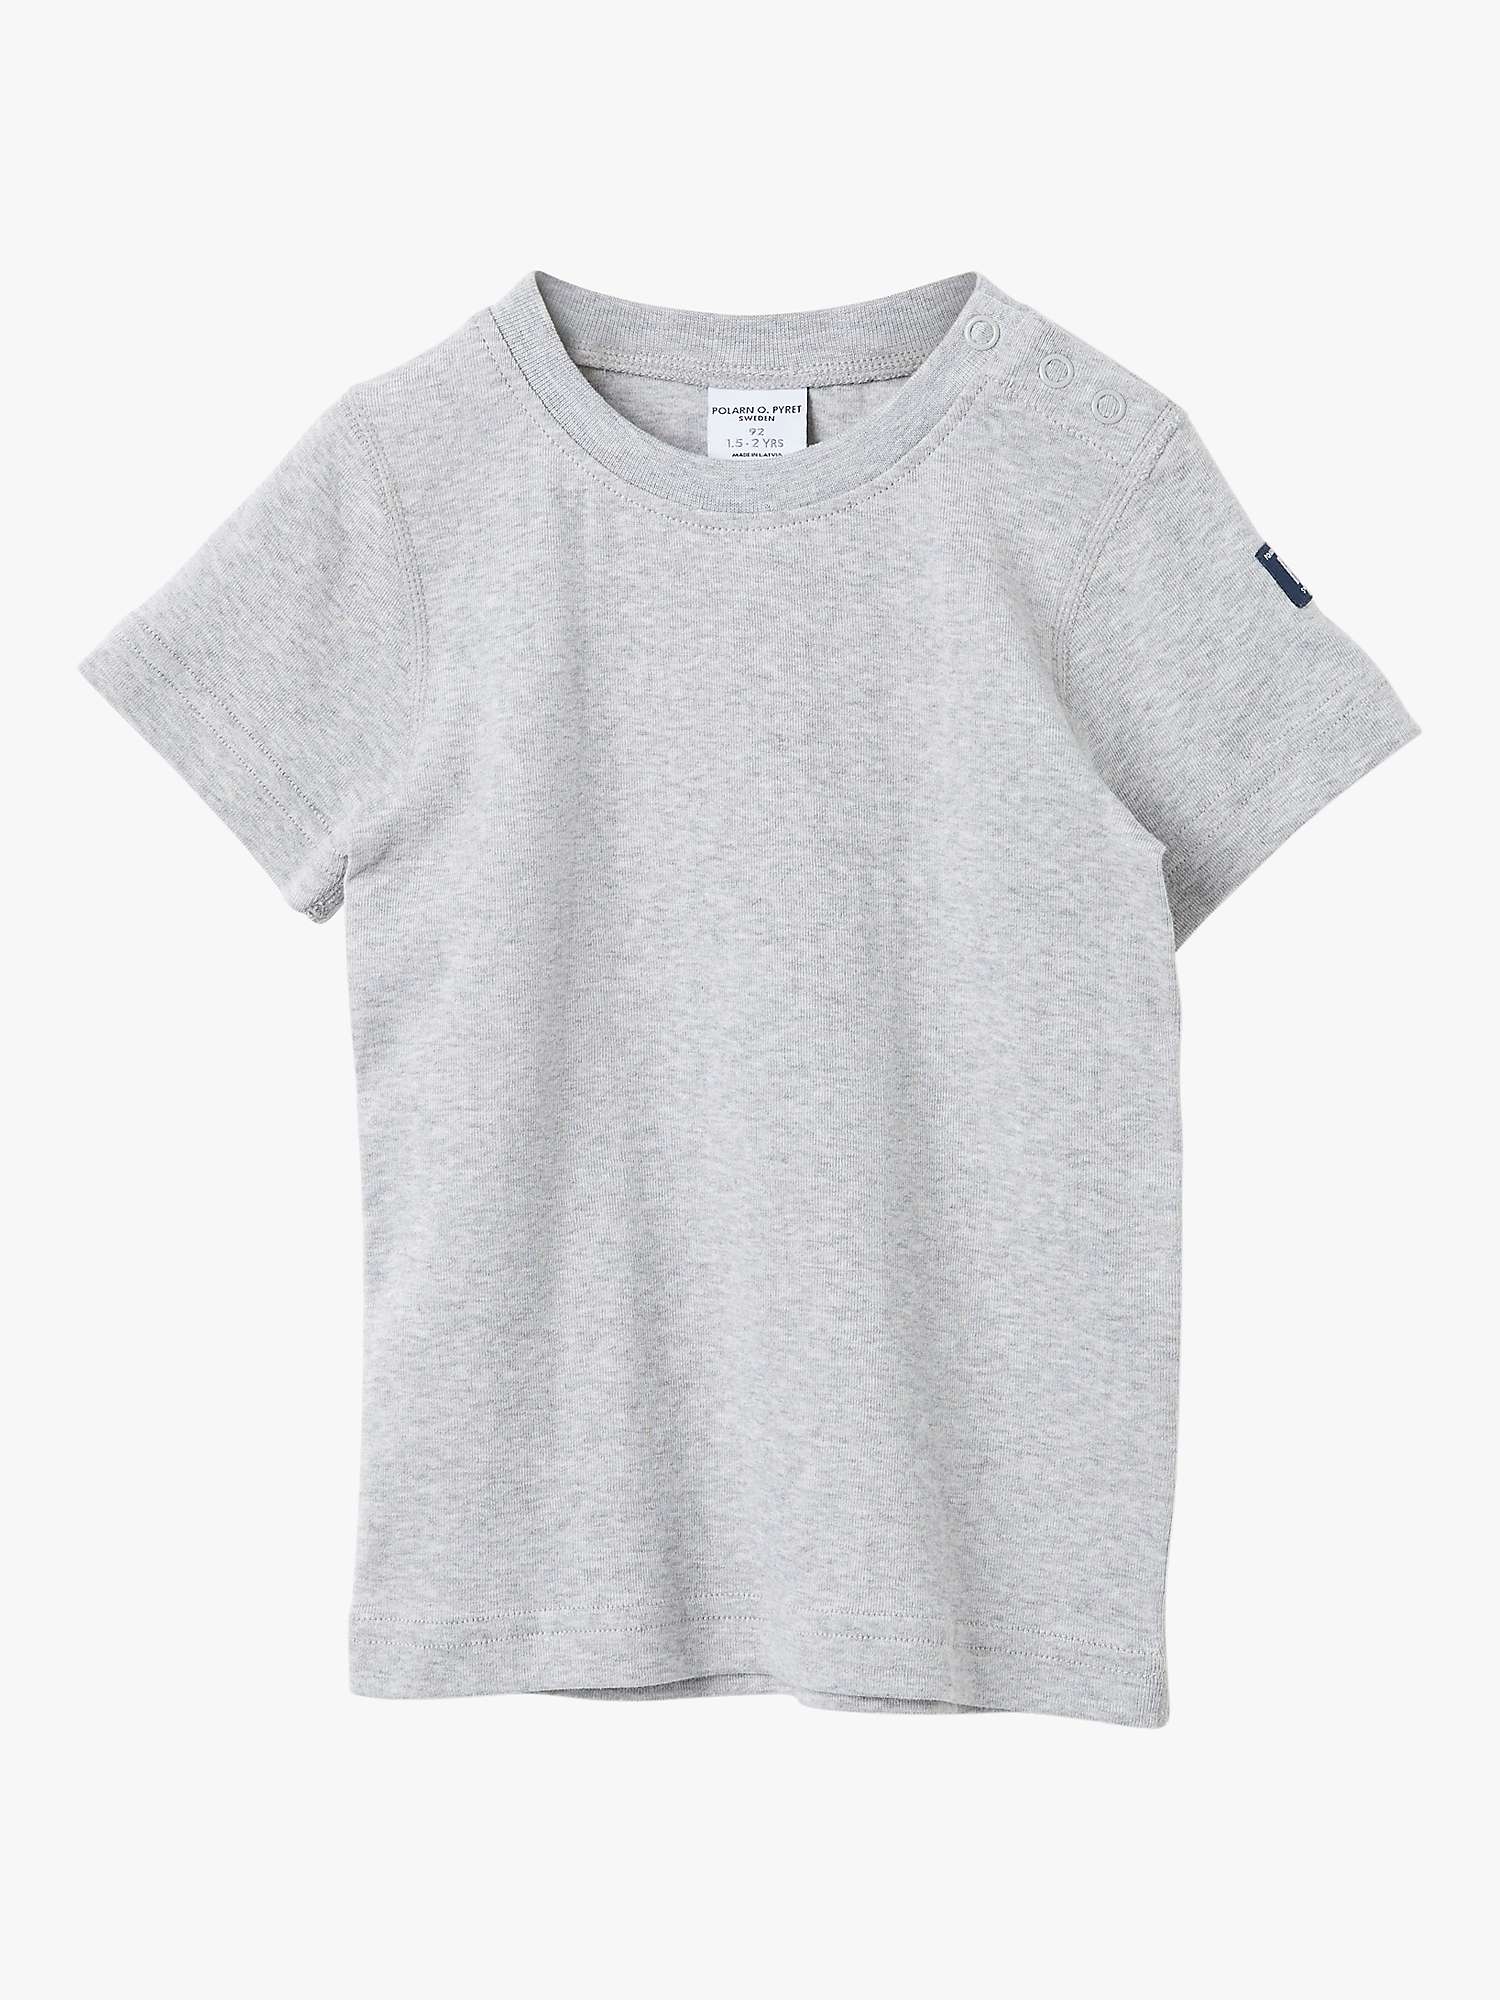 Buy Polarn O. Pyret Kids' Organic Cotton Short Sleeve T-Shirt Online at johnlewis.com